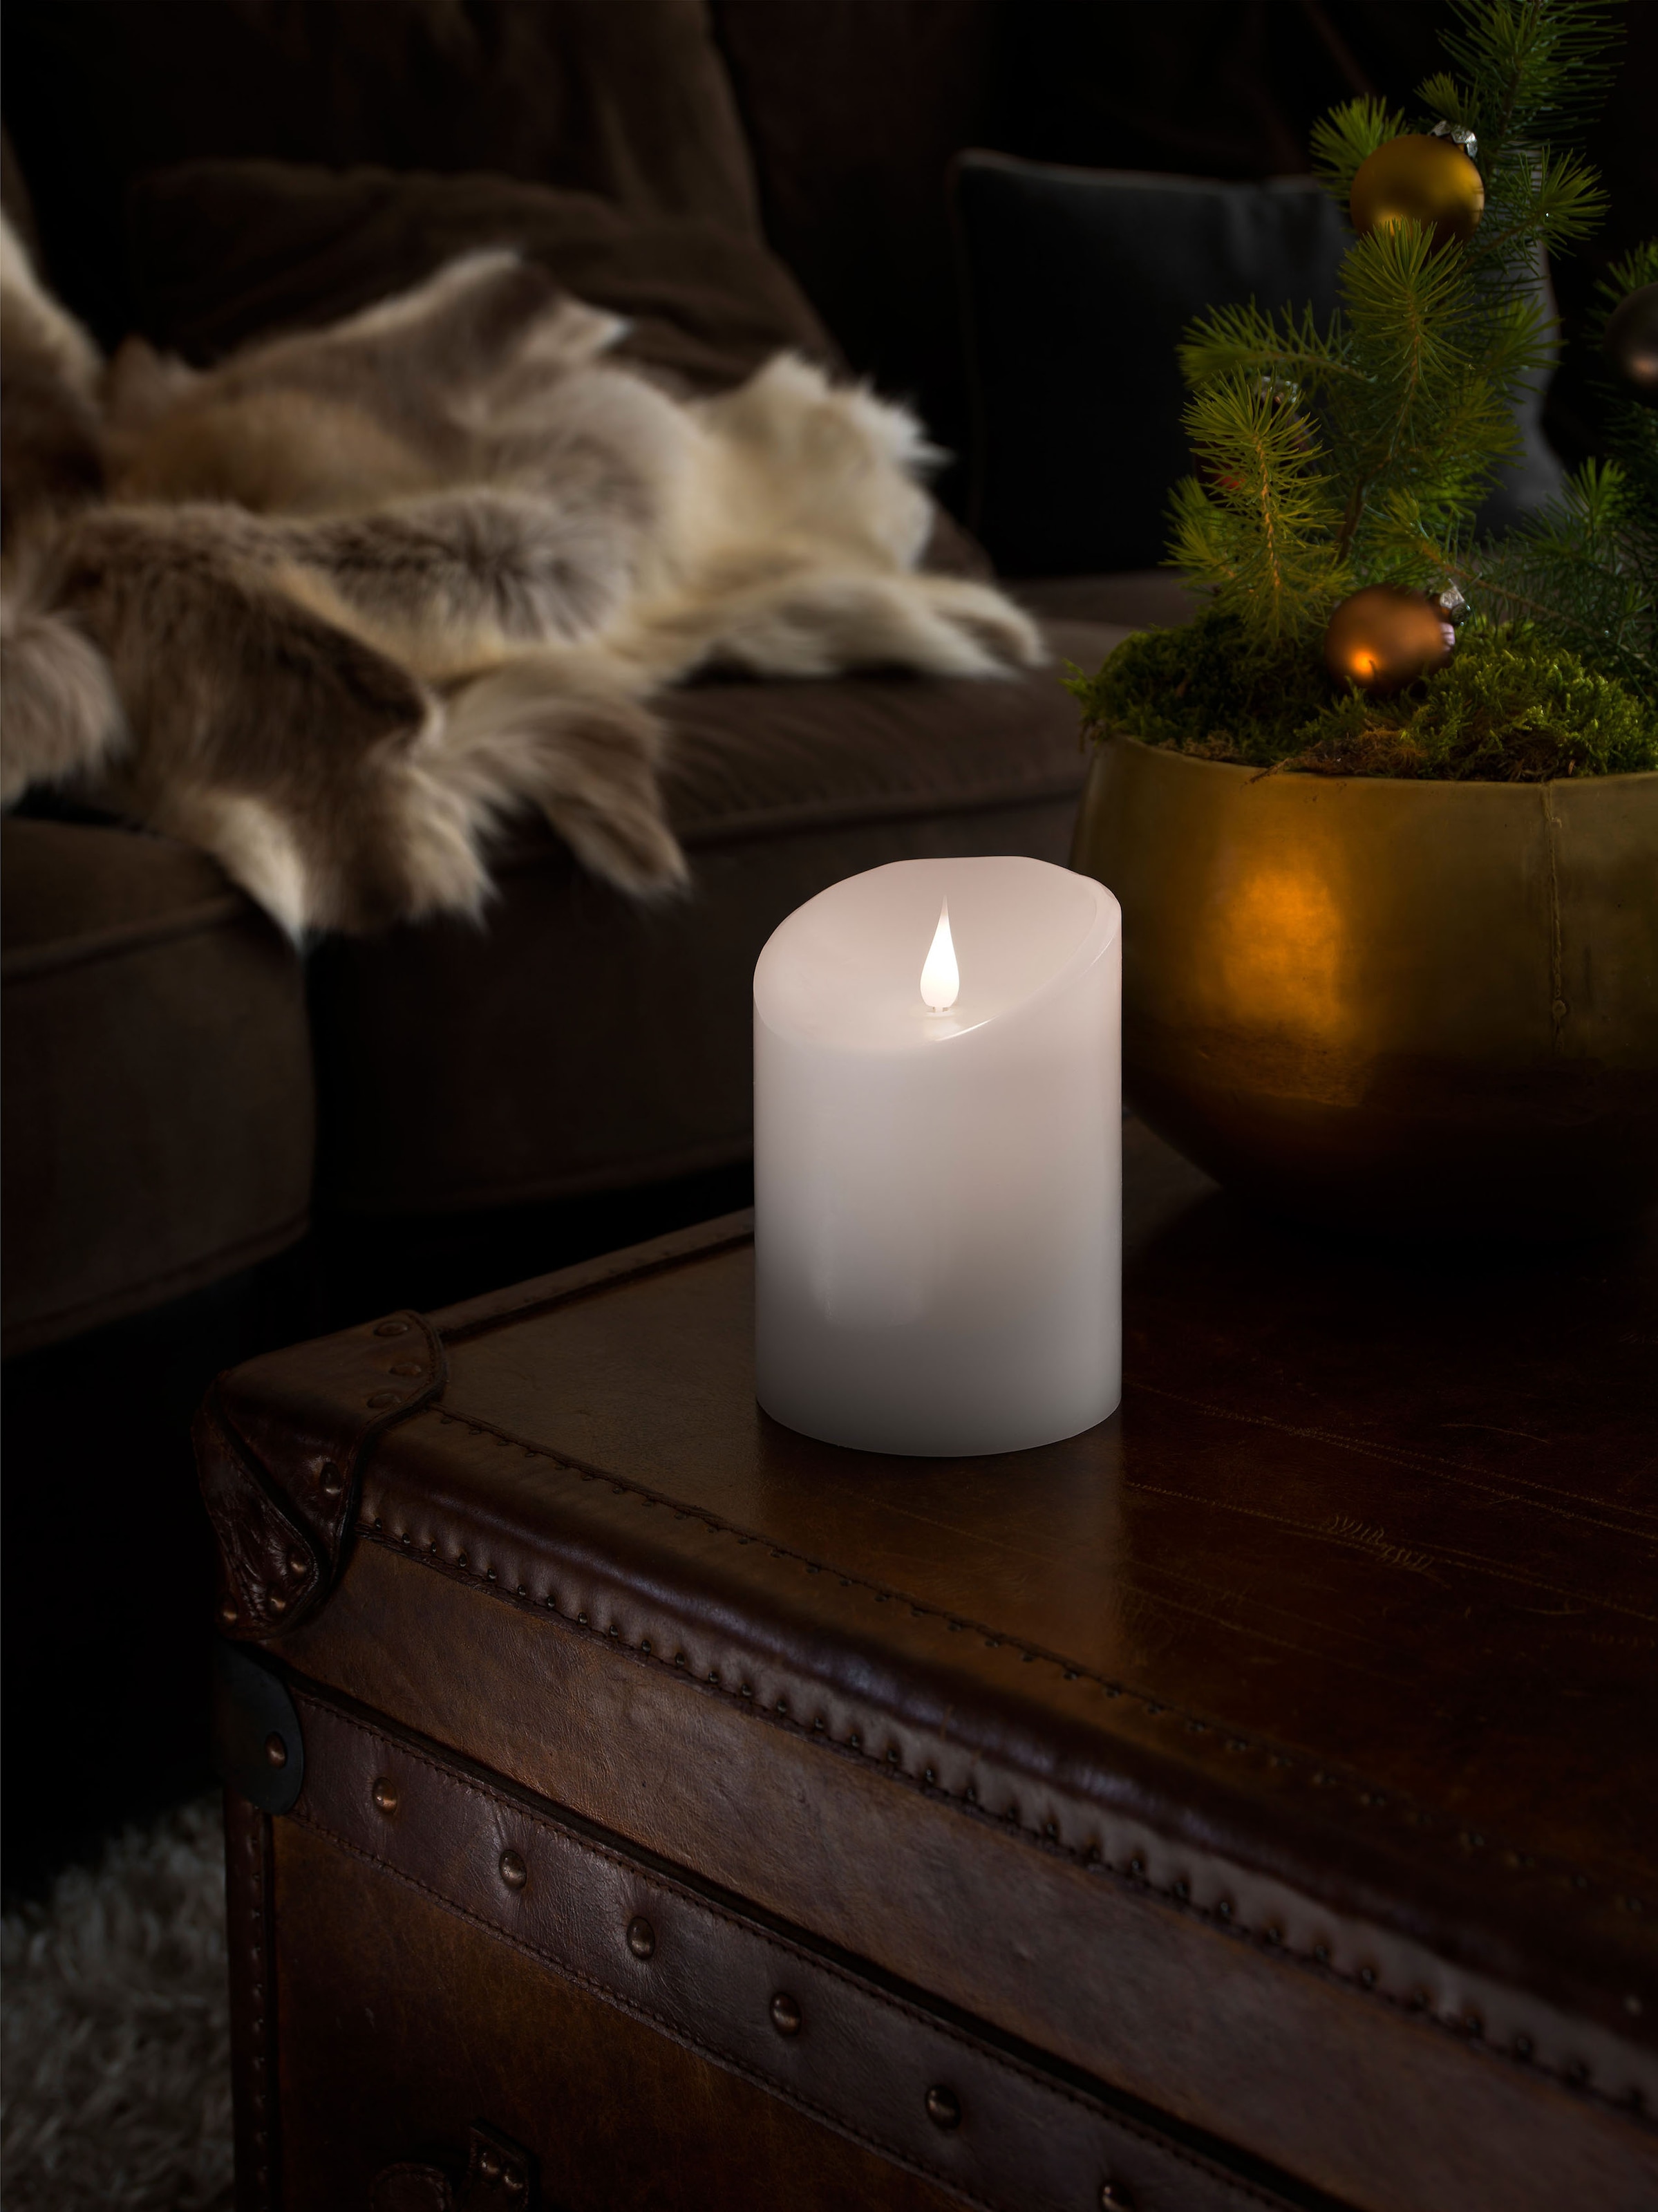 KONSTSMIDE LED-Kerze »Weihnachtsdeko«, LED Echtwachskerze, weiß, mit 3D  Flamme, Ø 10 cm, Höhe: 14 cm bequem bestellen